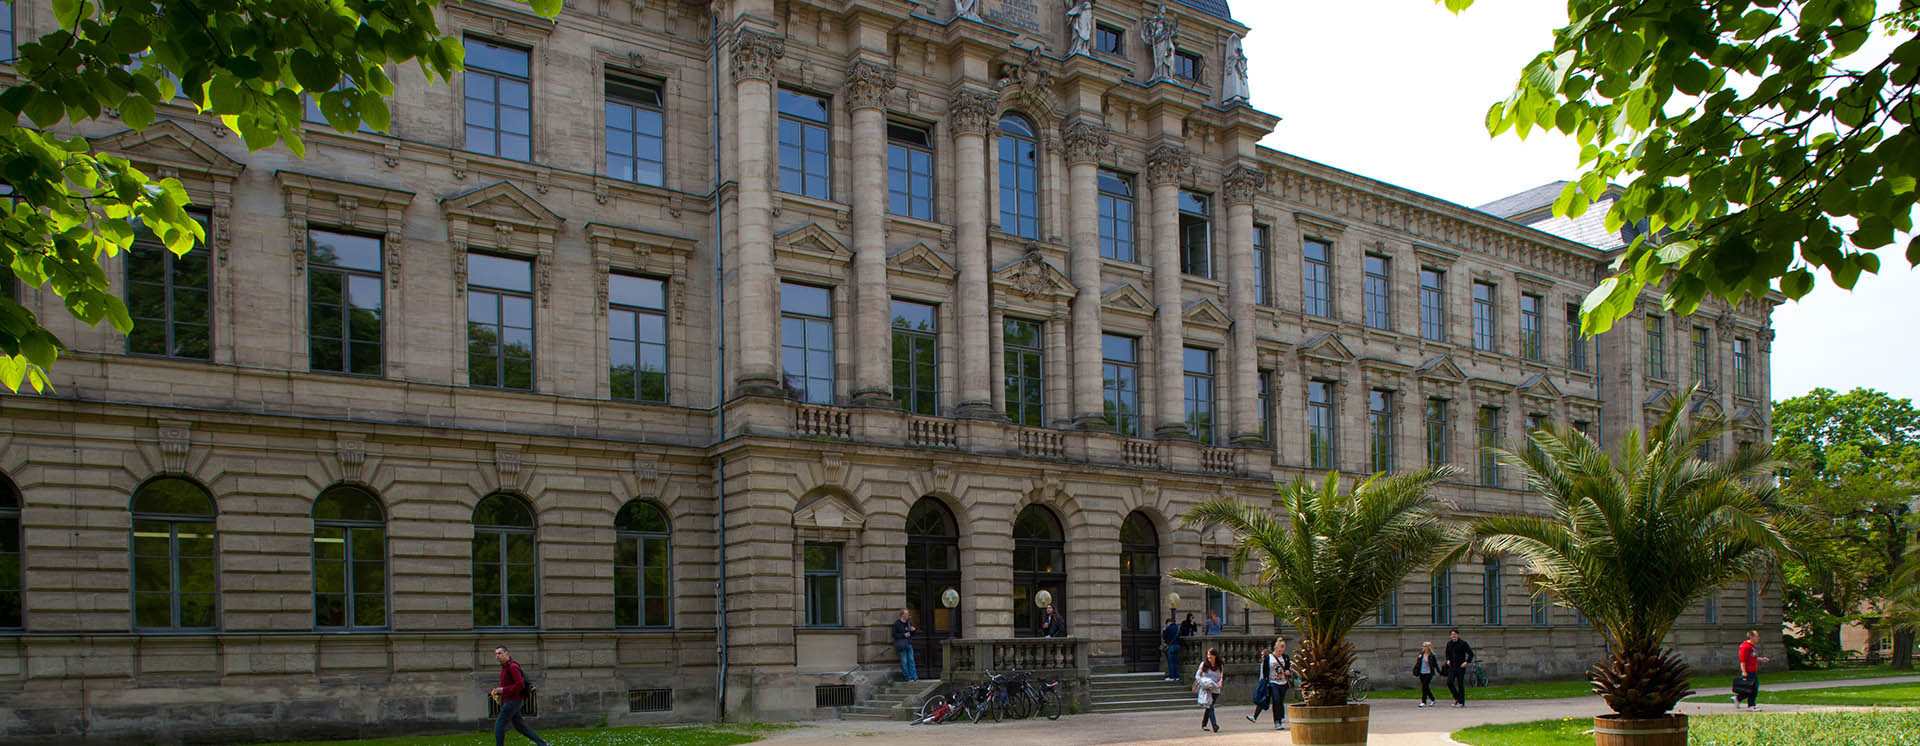 Kollegienhaus, Friedrich-Alexander University